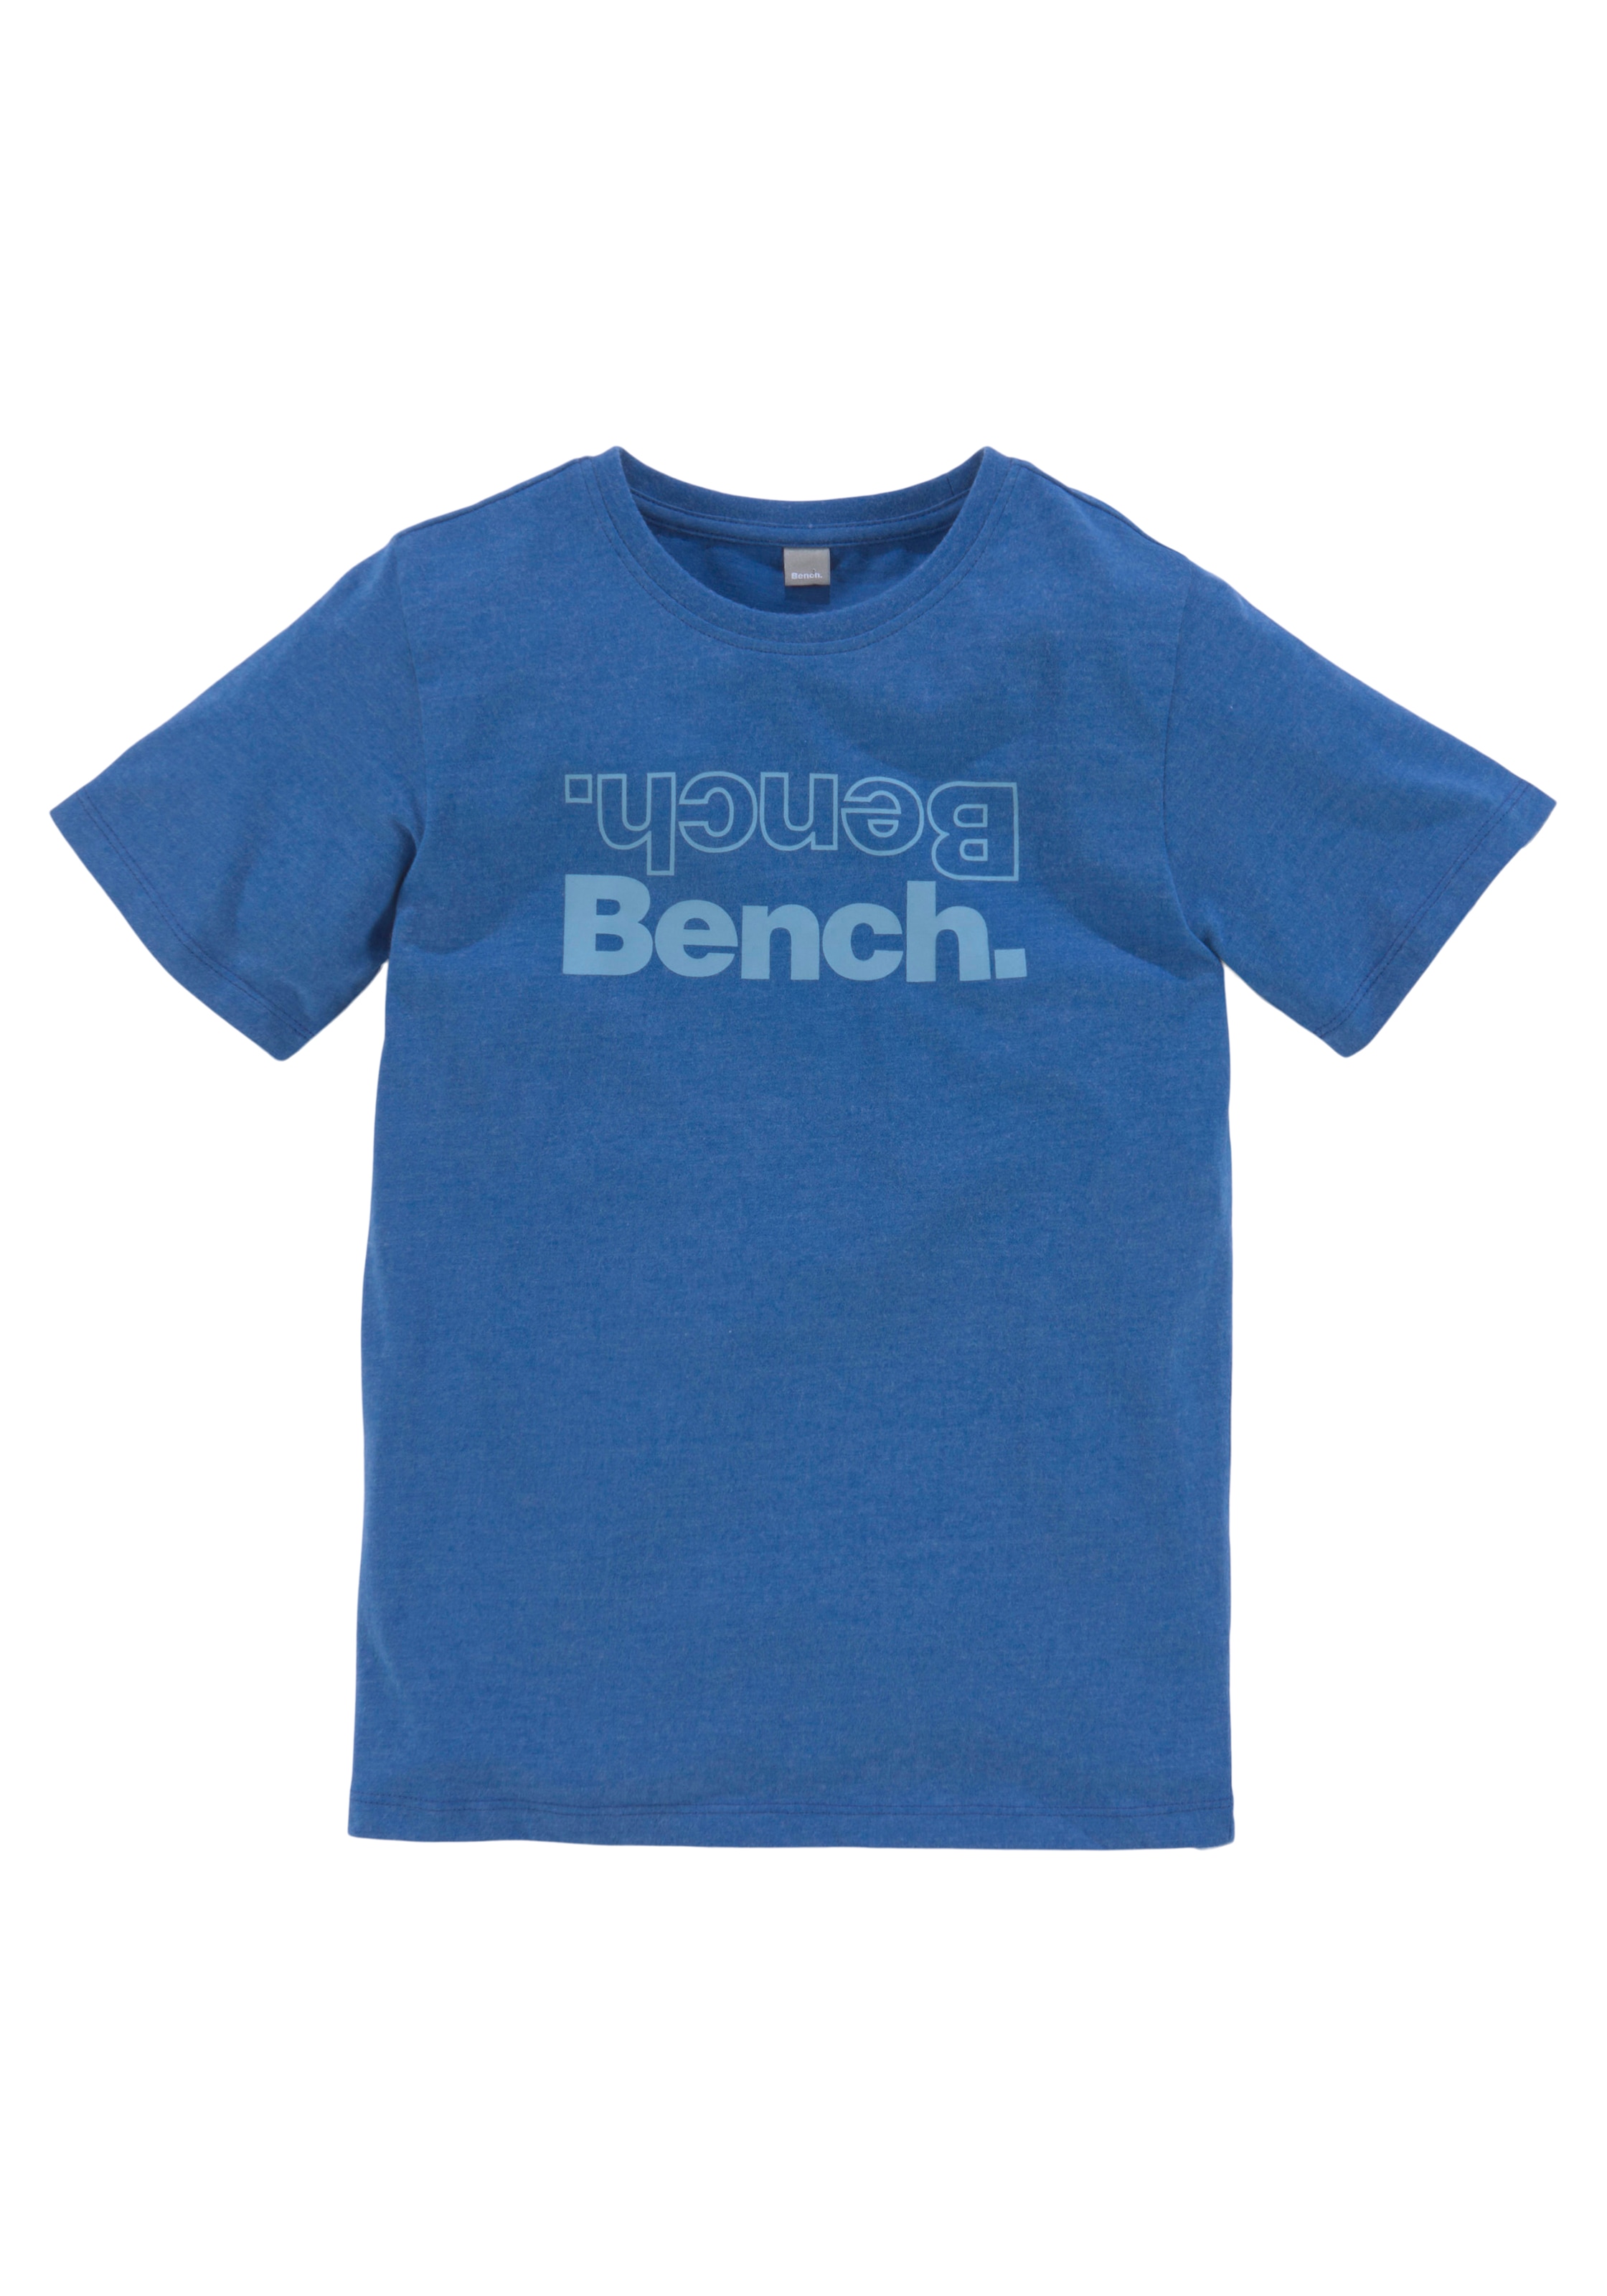 ✌ en ligne »mit Acheter coolem T-Shirt Brustdruck« Bench.